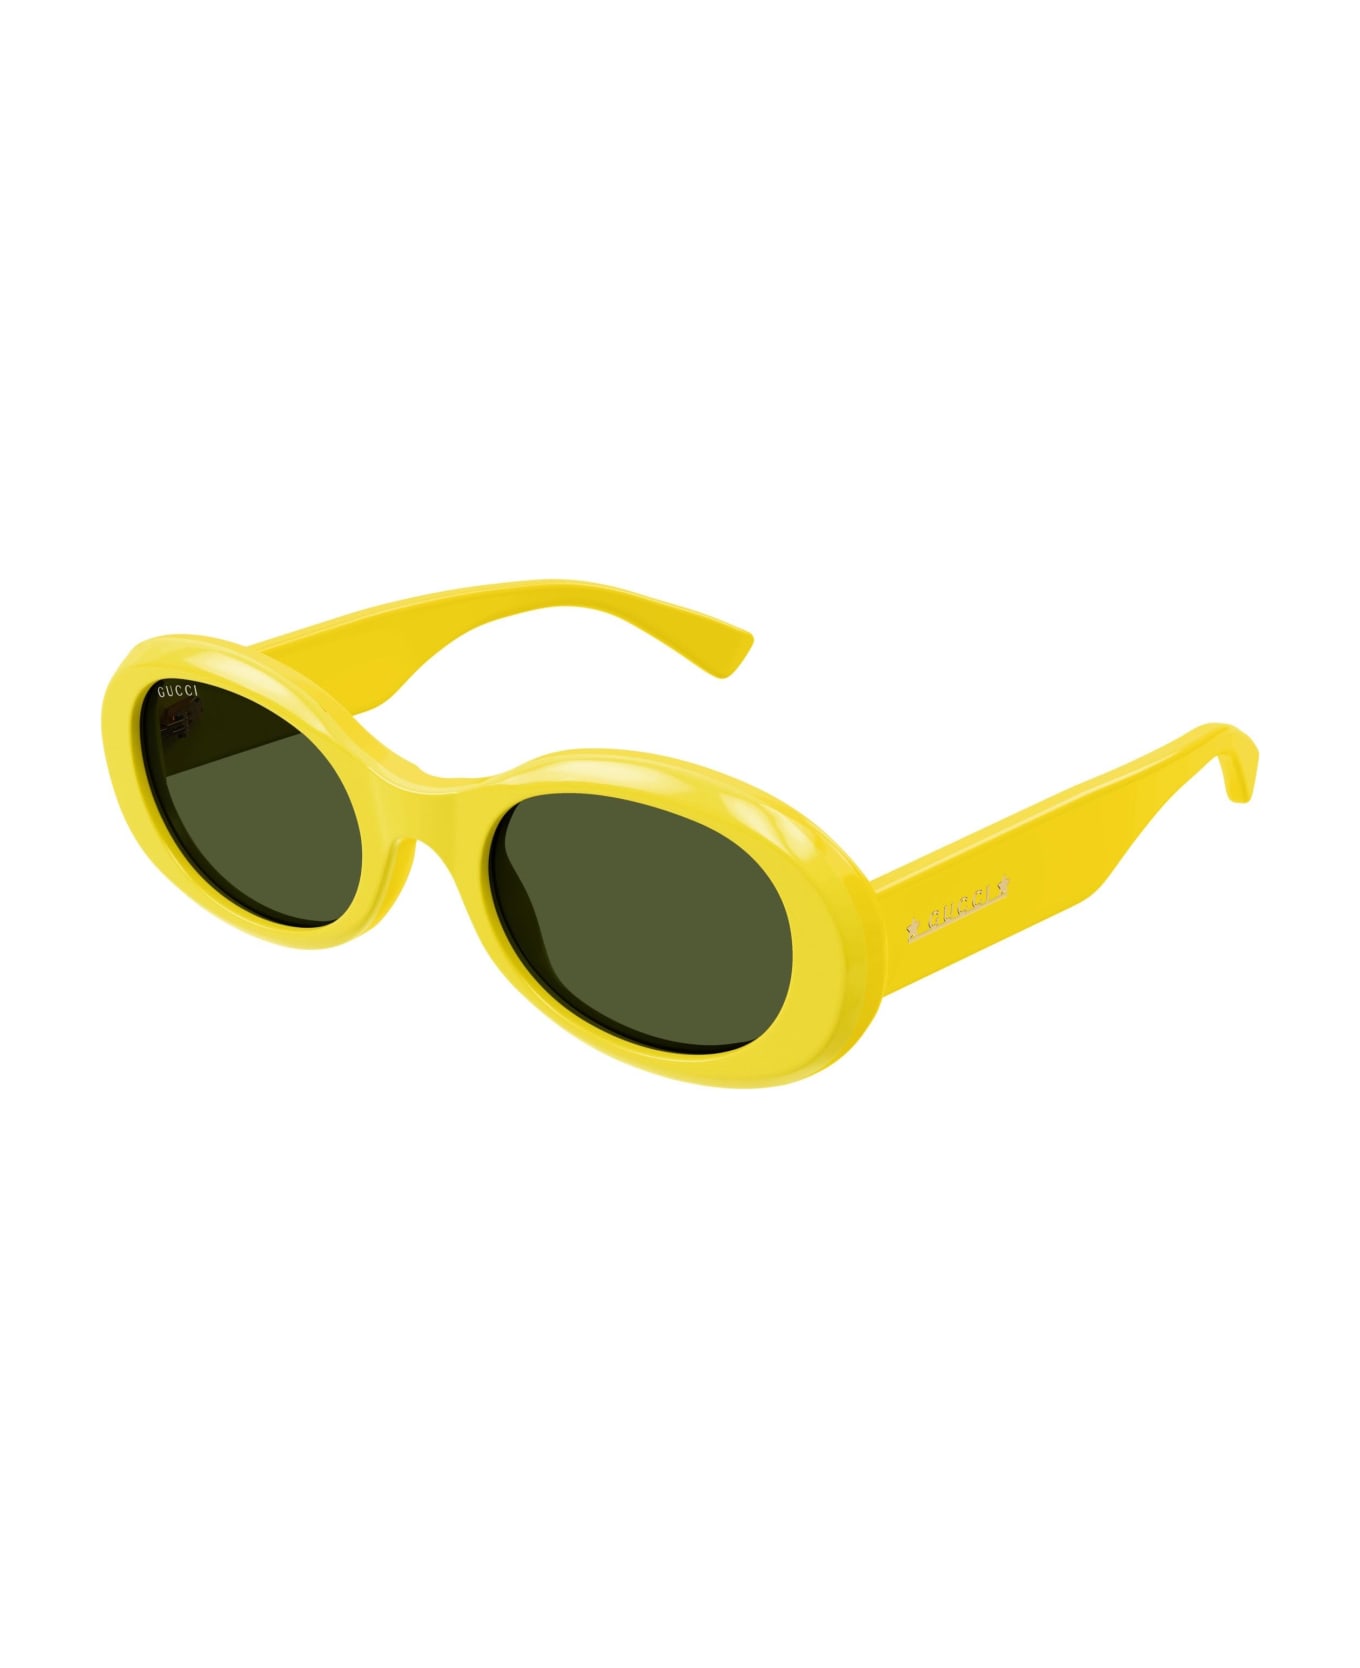 Gucci Eyewear Sunglasses - Giallo/Verde